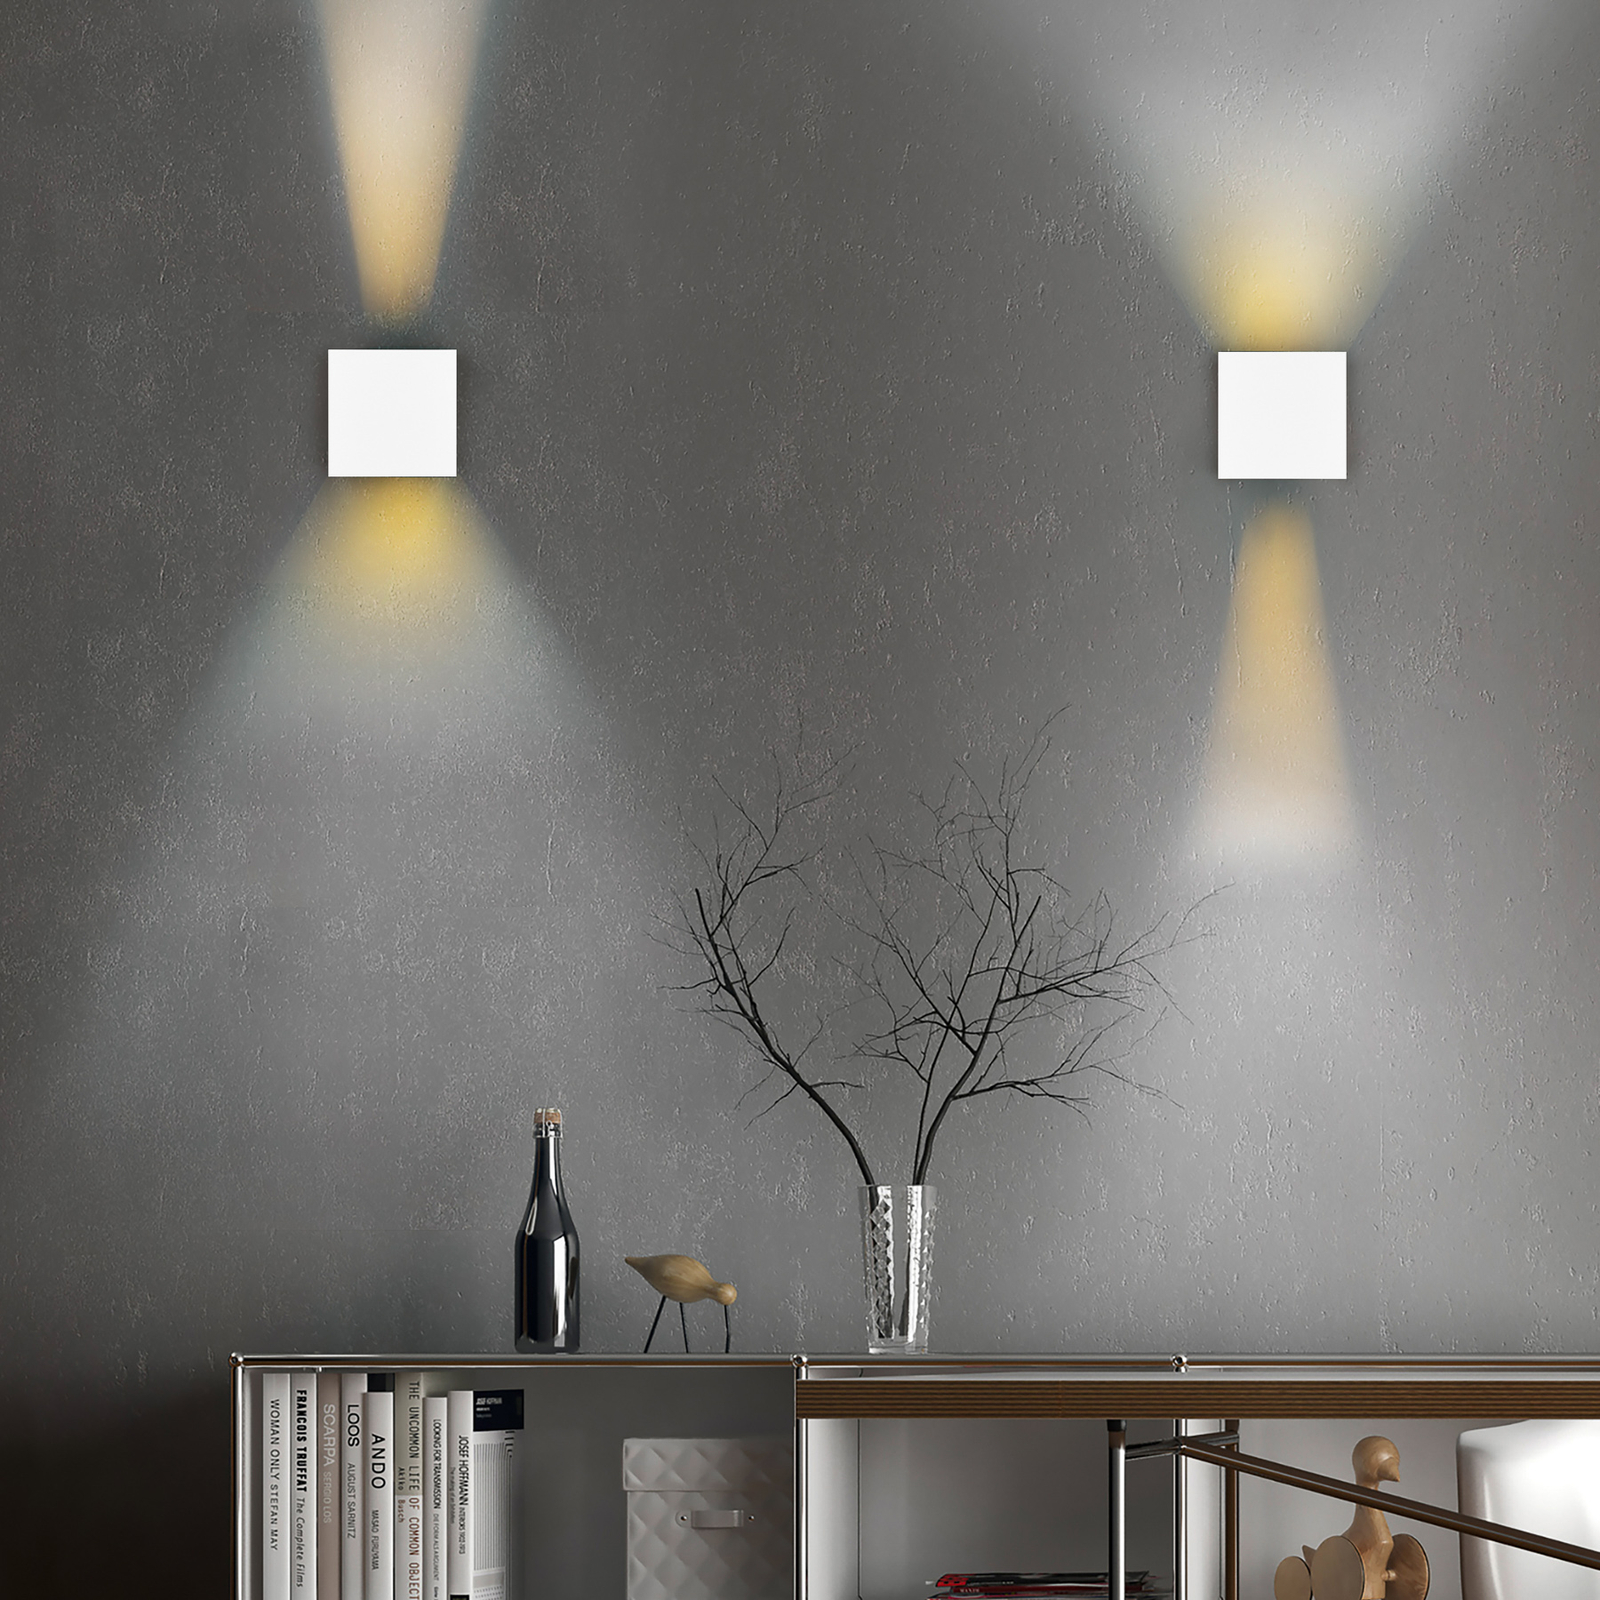 LED outdoor wall lamp Talent, white, width 10 cm, sensor